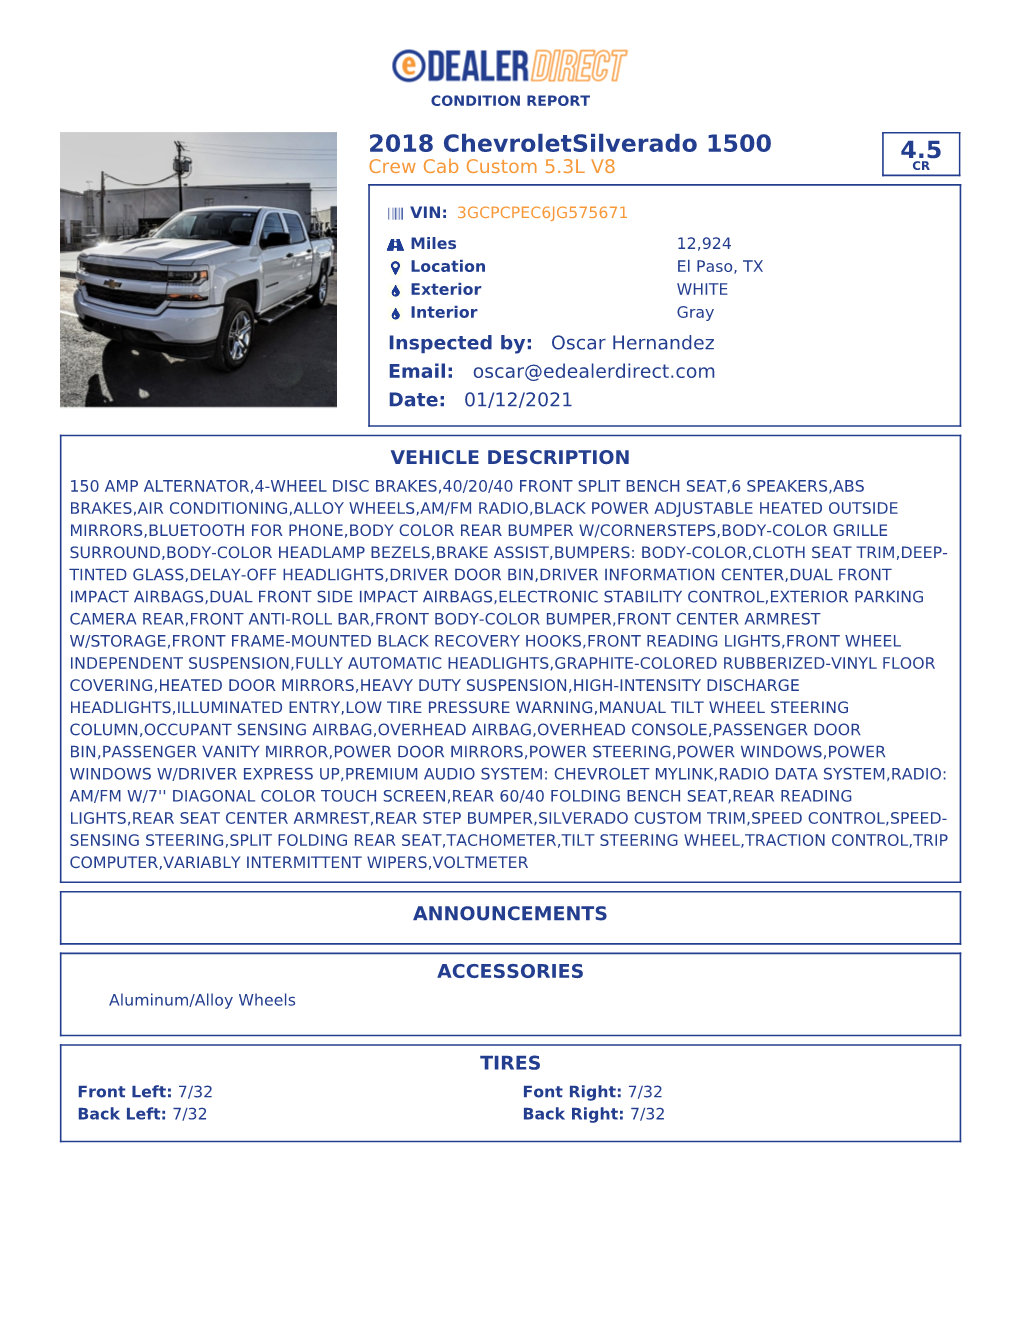 2018 Chevroletsilverado 1500 4.5 Crew Cab Custom 5.3L V8 CR